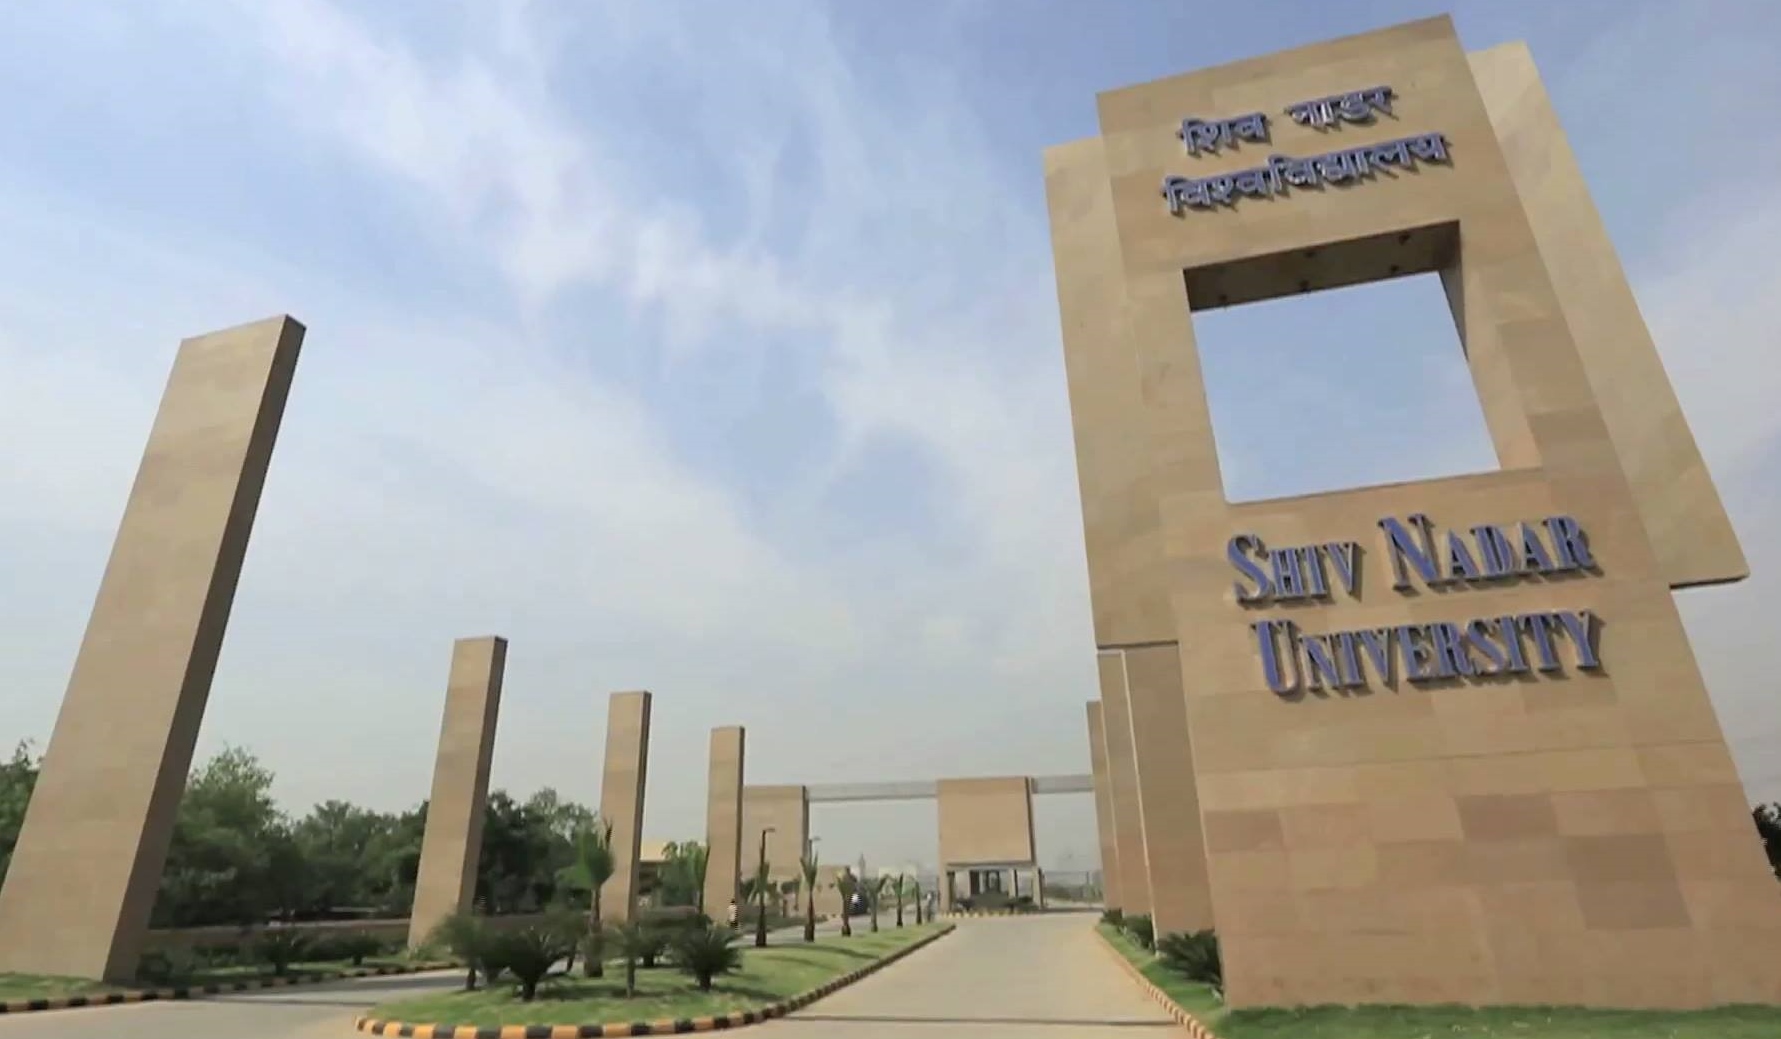 Shiv Nadar University - Wikipedia